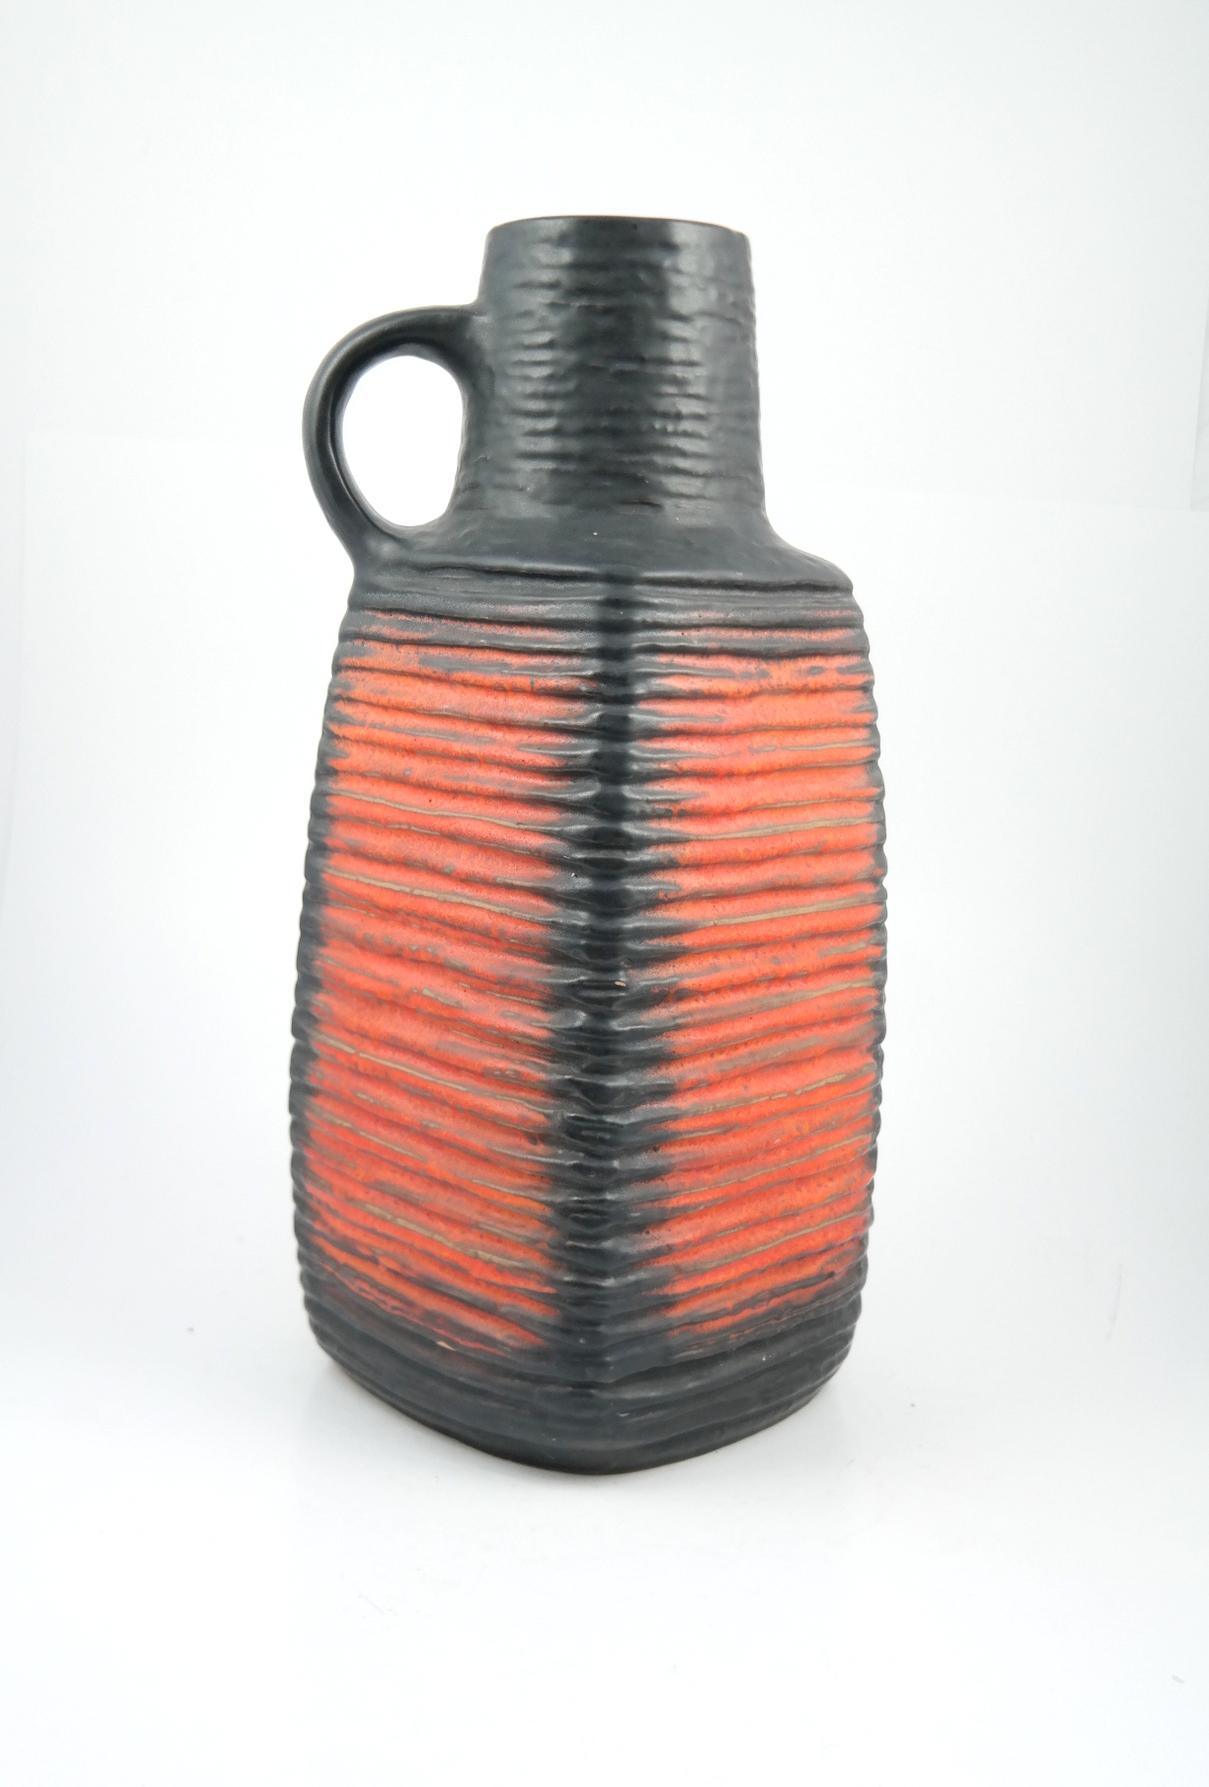 Signed, West-German large midcentury handmade ceramic vase, 1970s.